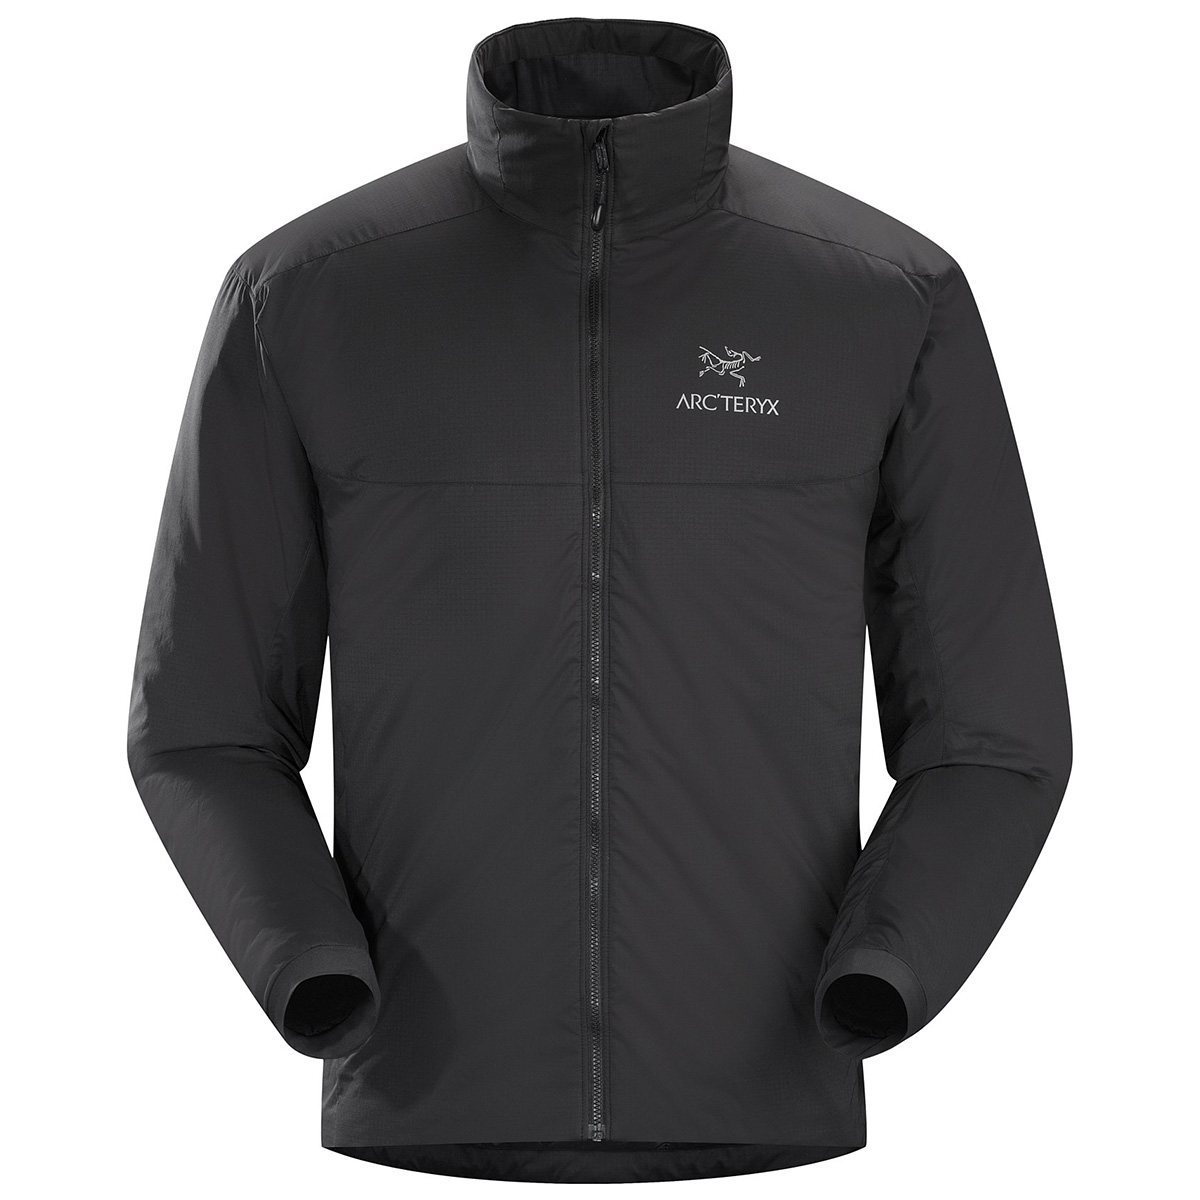 Arc'teryx Atom AR Jacket, men's, discontinued Fall 2019 model (free ...